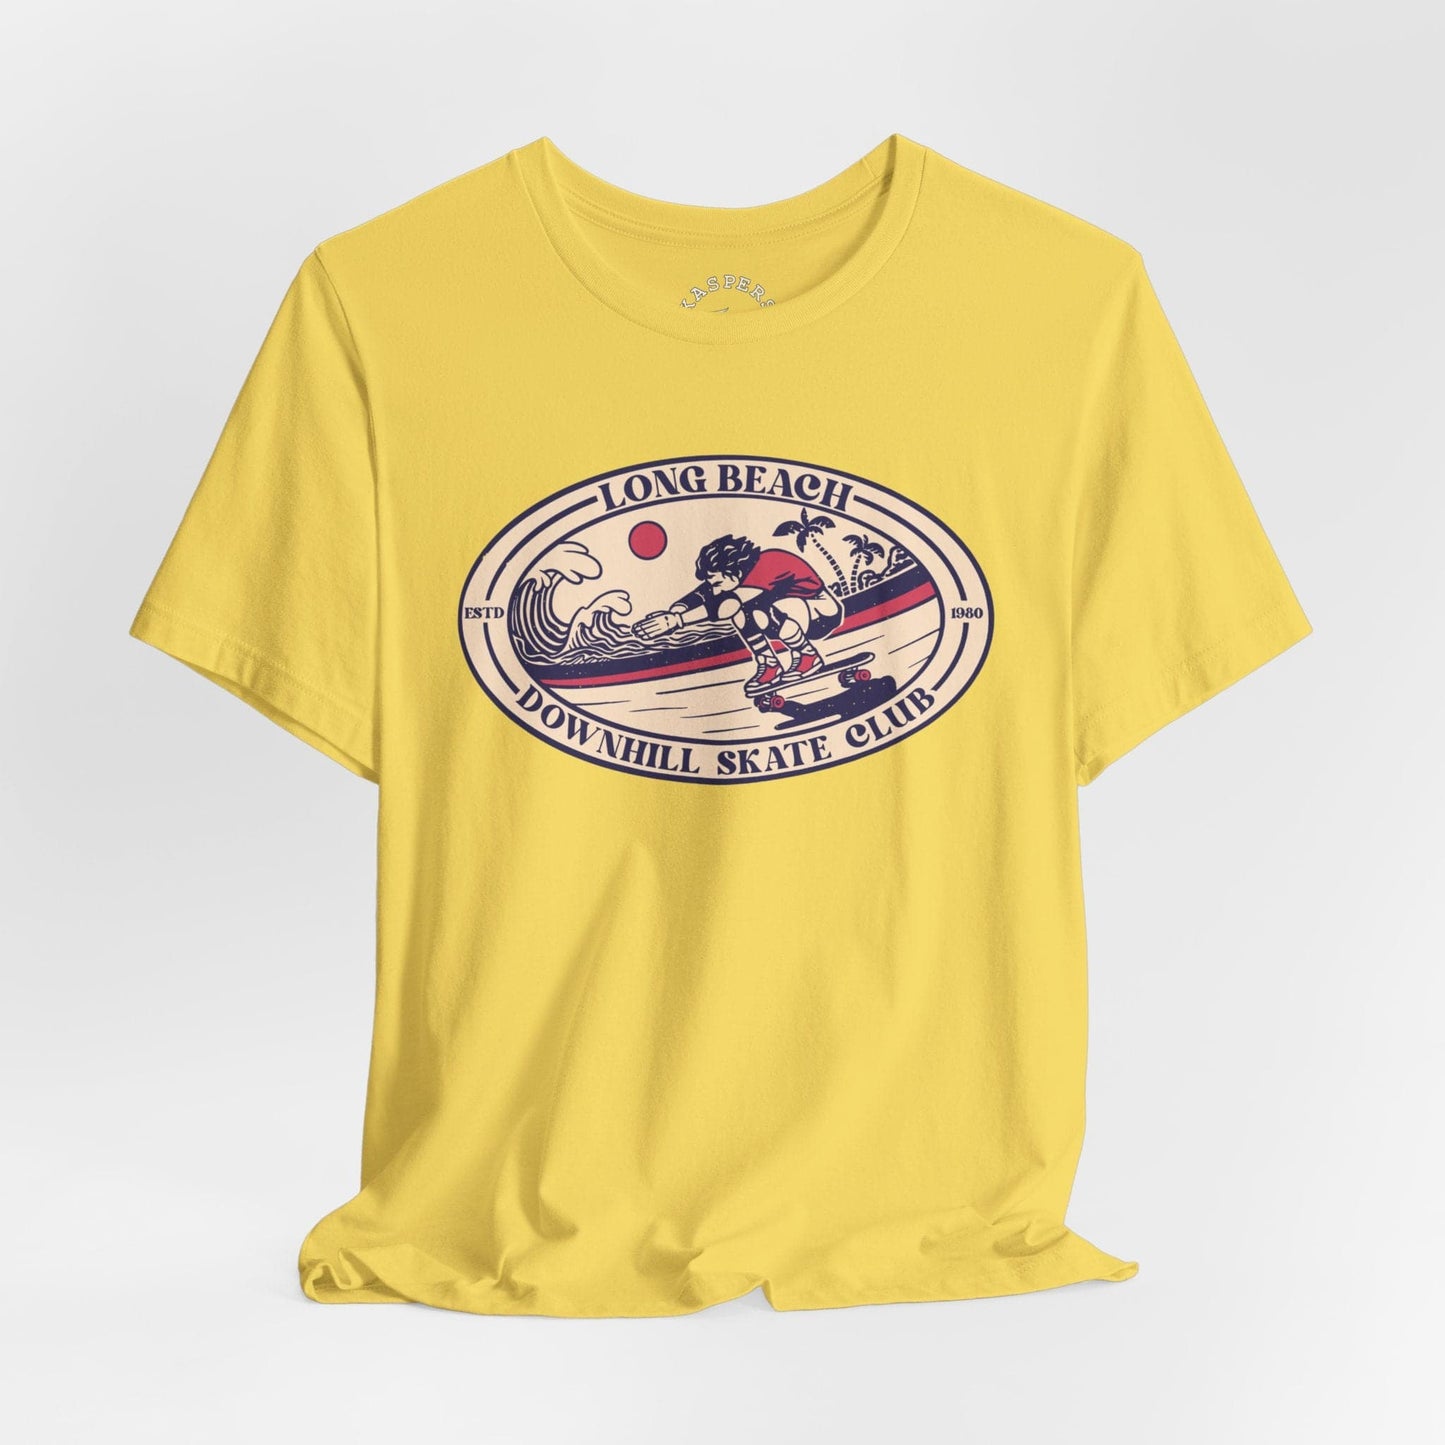 Long Beach Downhill Skate Club T-Shirt